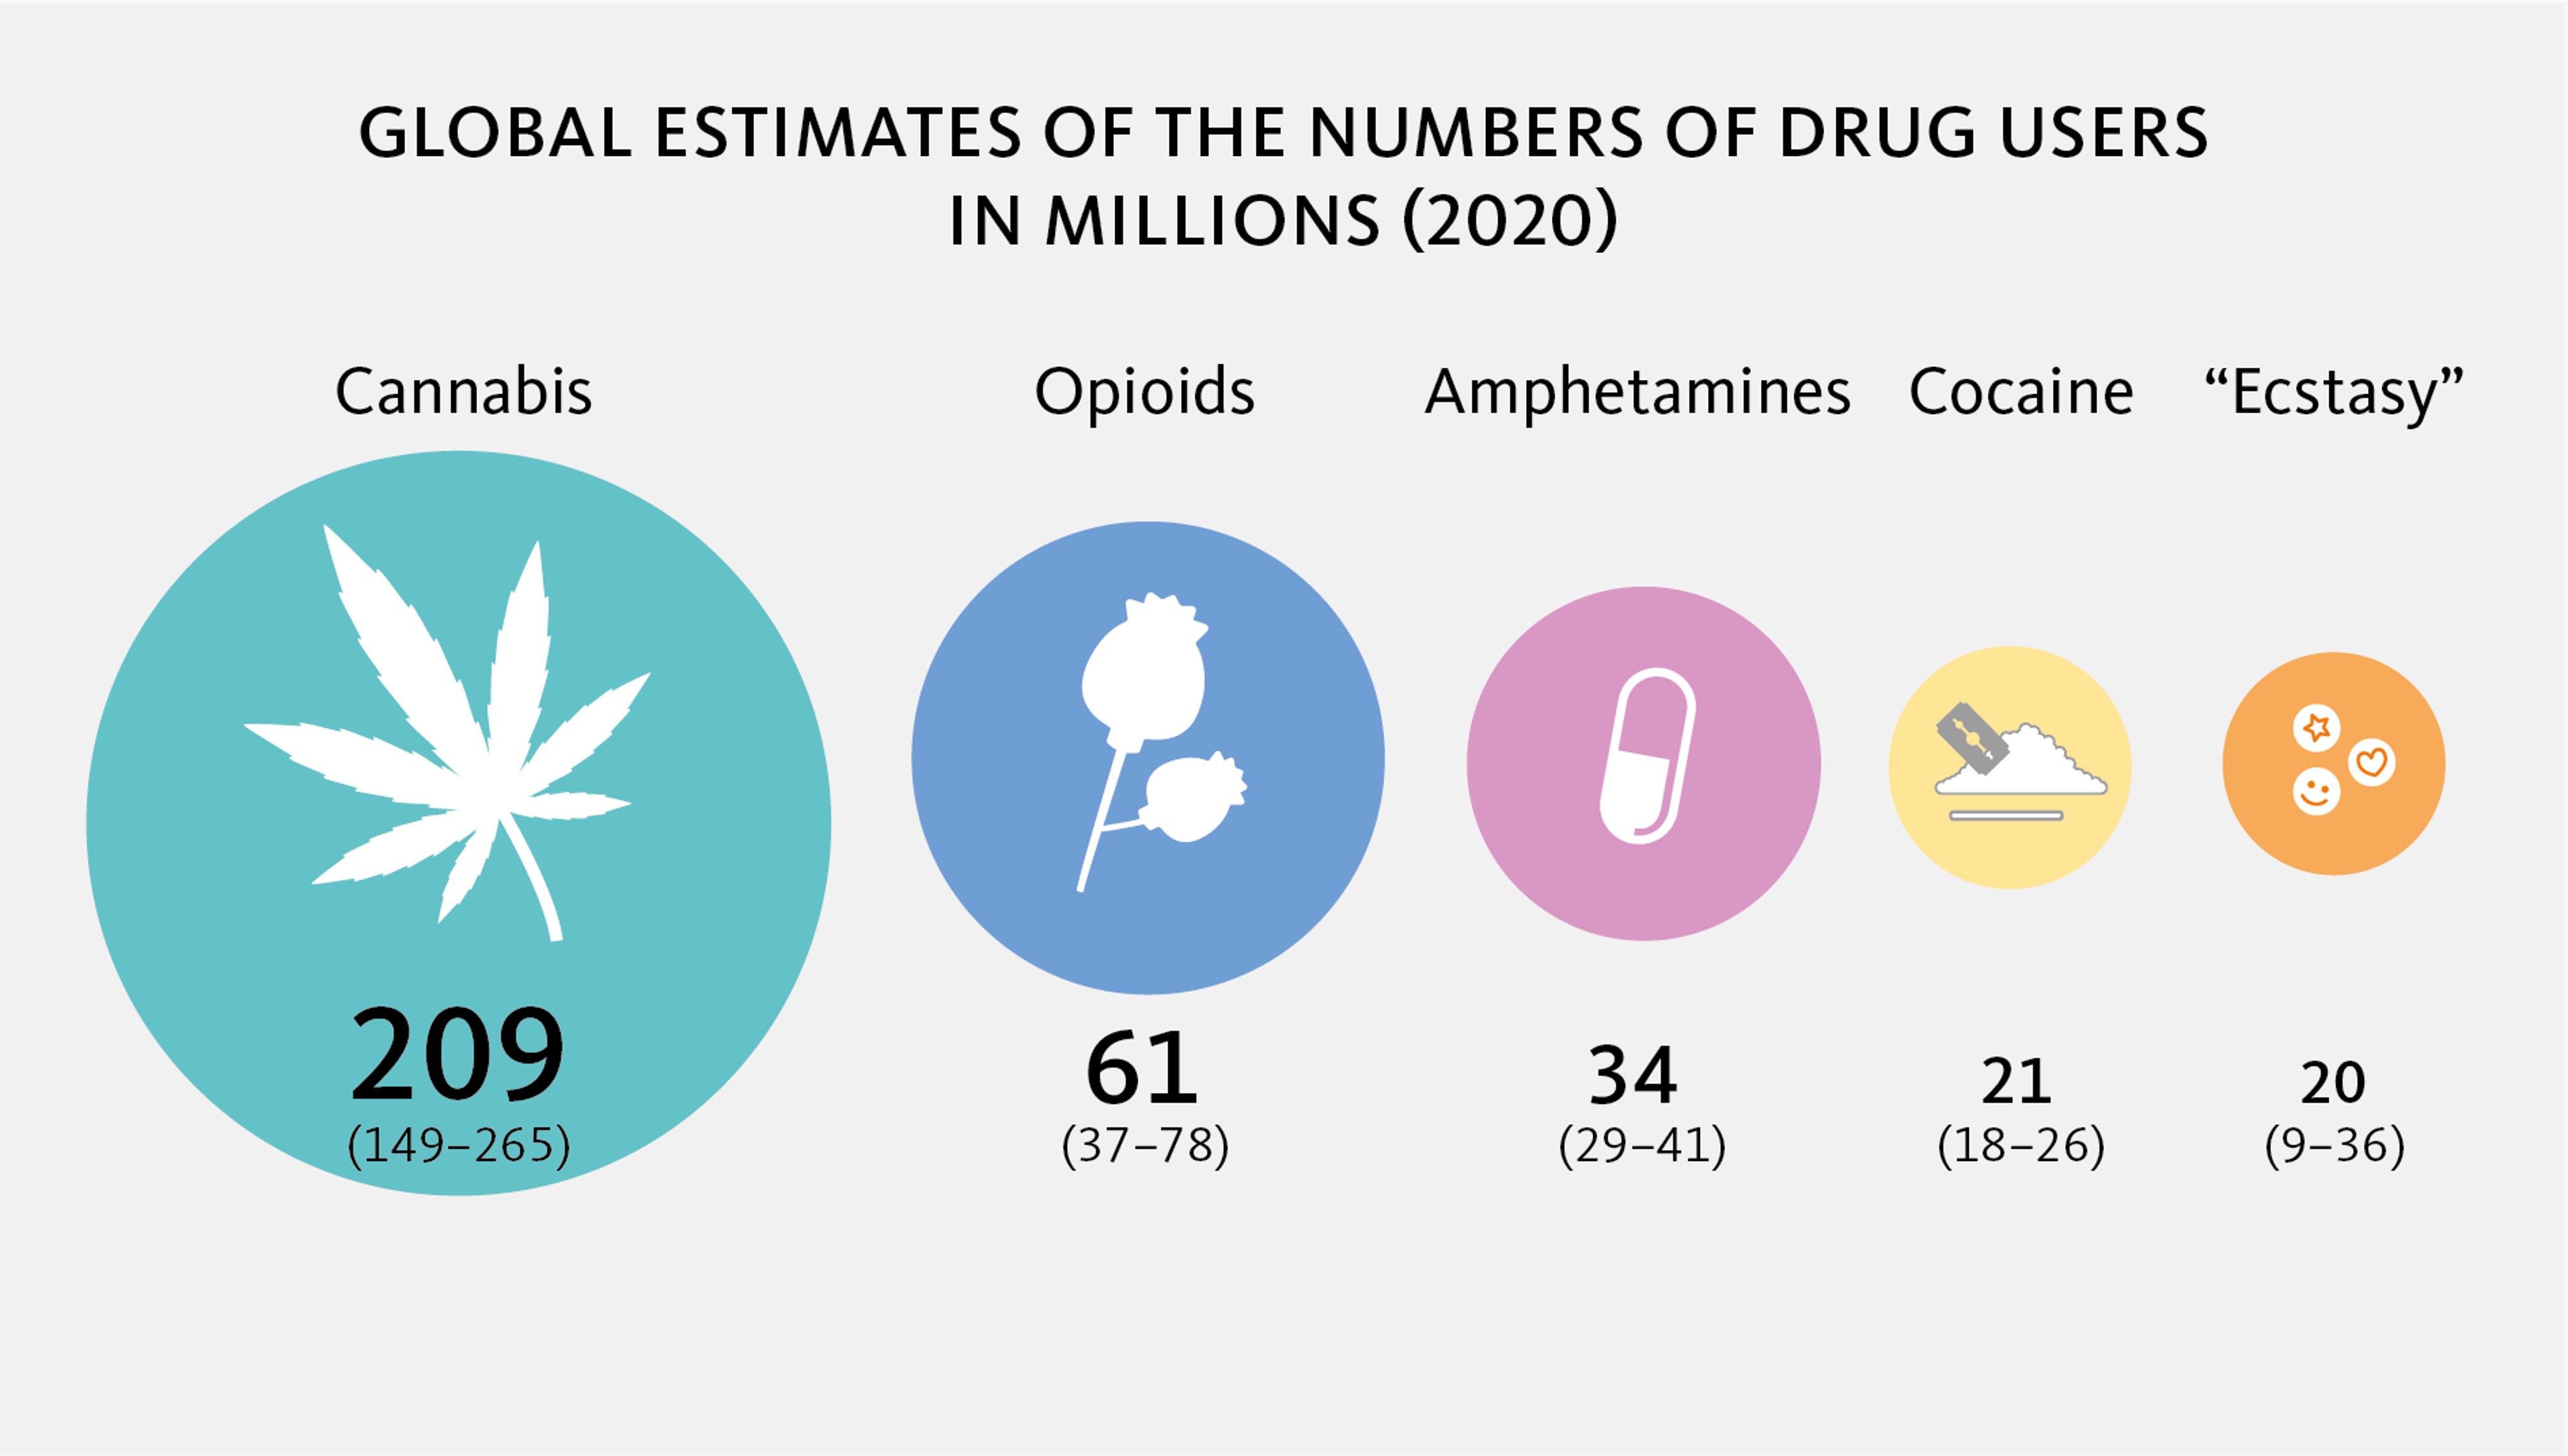 Global estimates of drug users in 2020